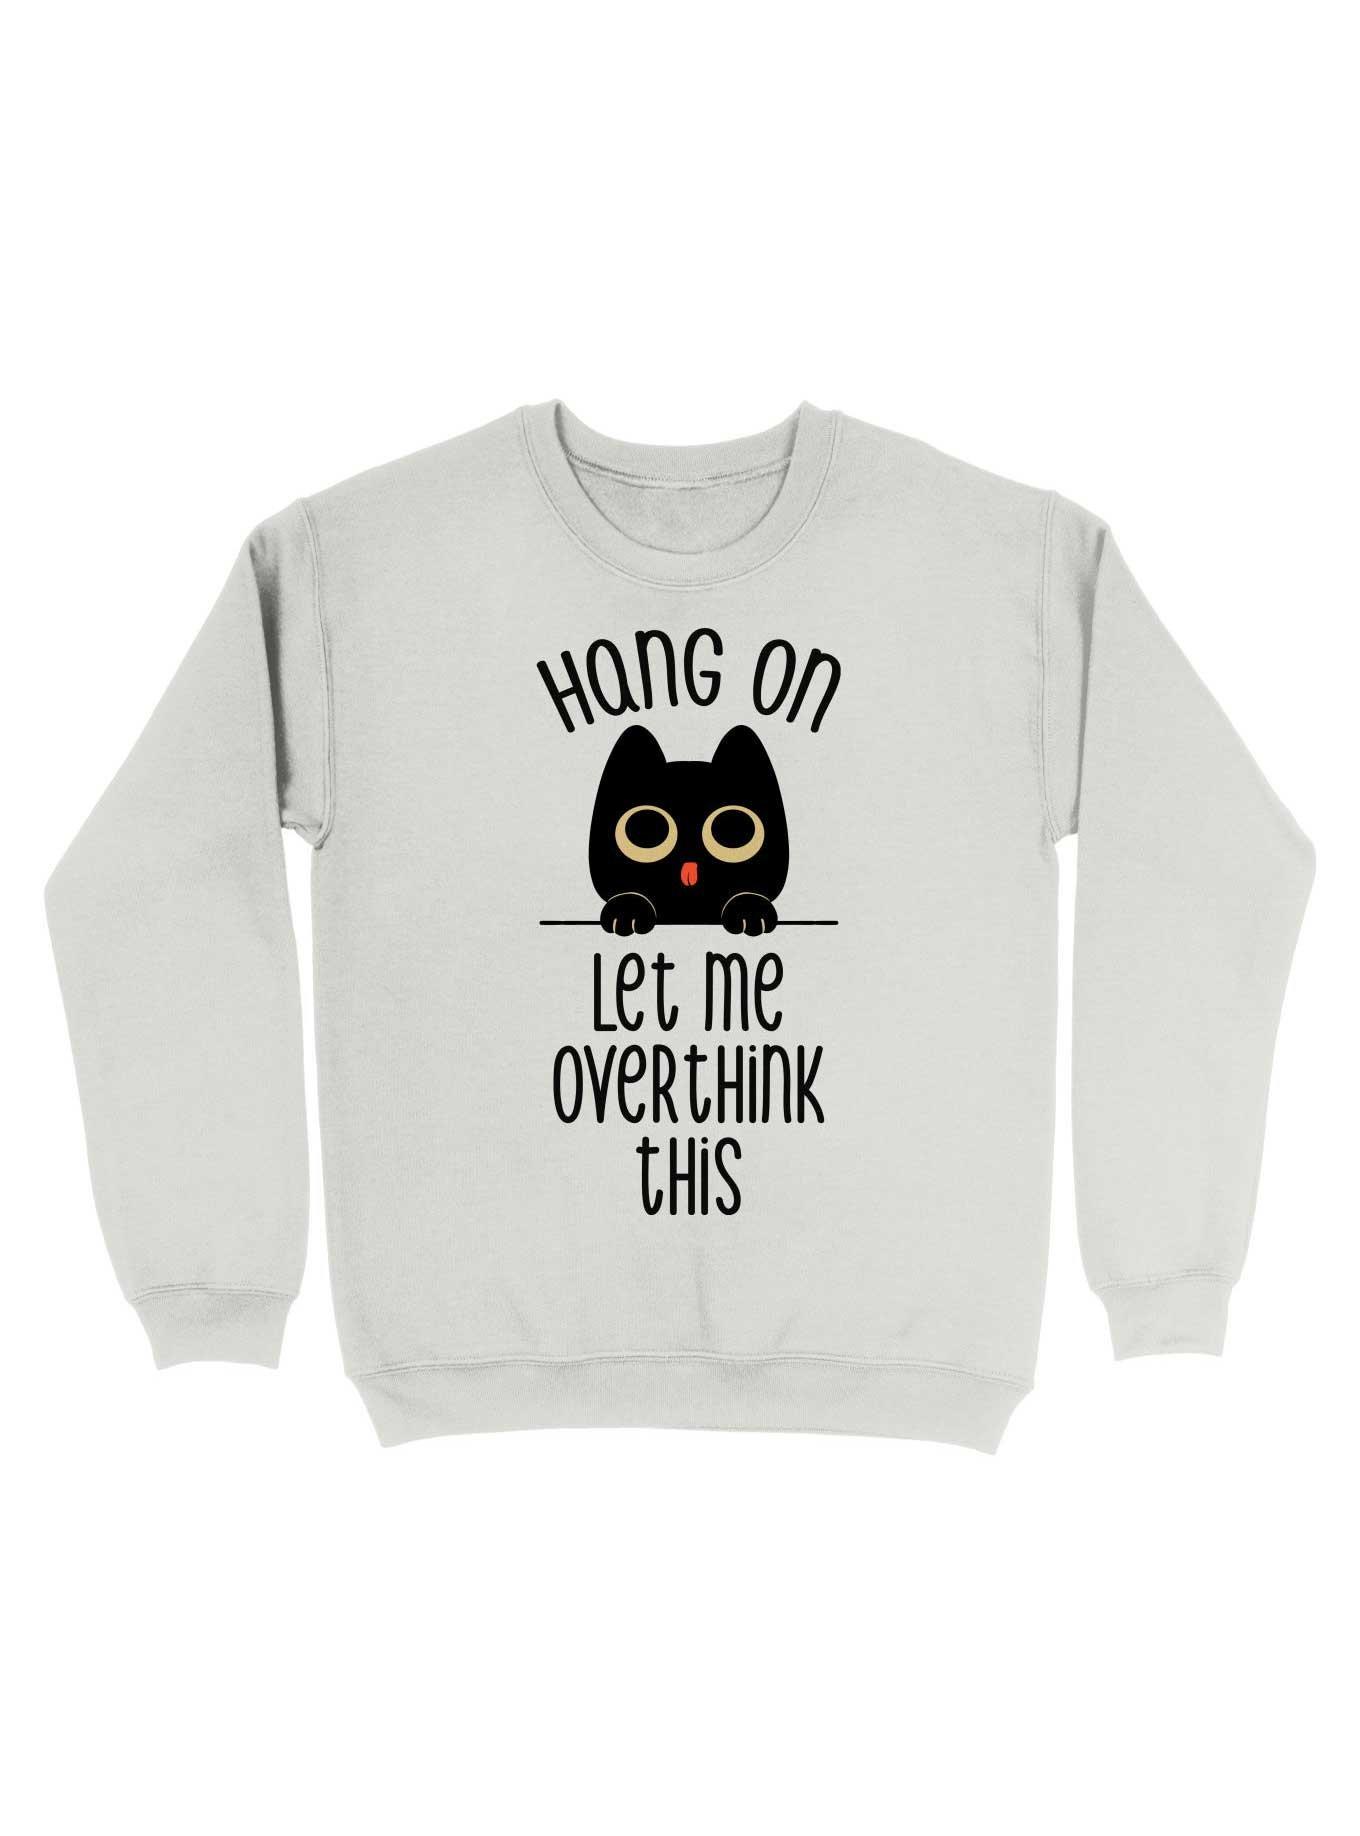 Hang On Let Me Overthink This Black Cat Sweatshirt